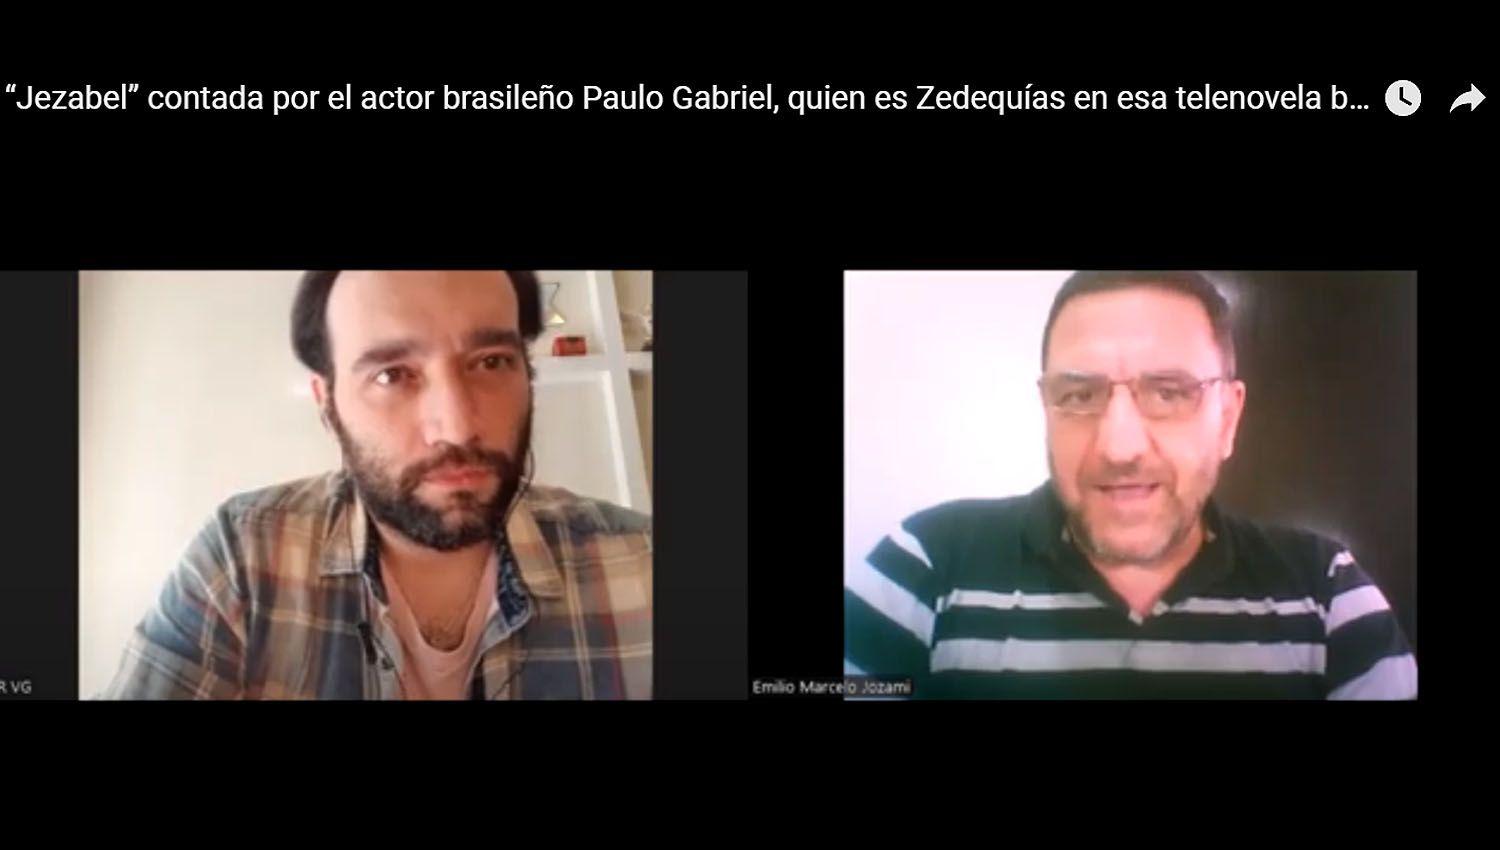 ldquoJezabelrdquo contada por el actor brasilentildeo Paulo Gabriel quien interpreta a Zedequiacuteas en esa telenovela biacuteblica